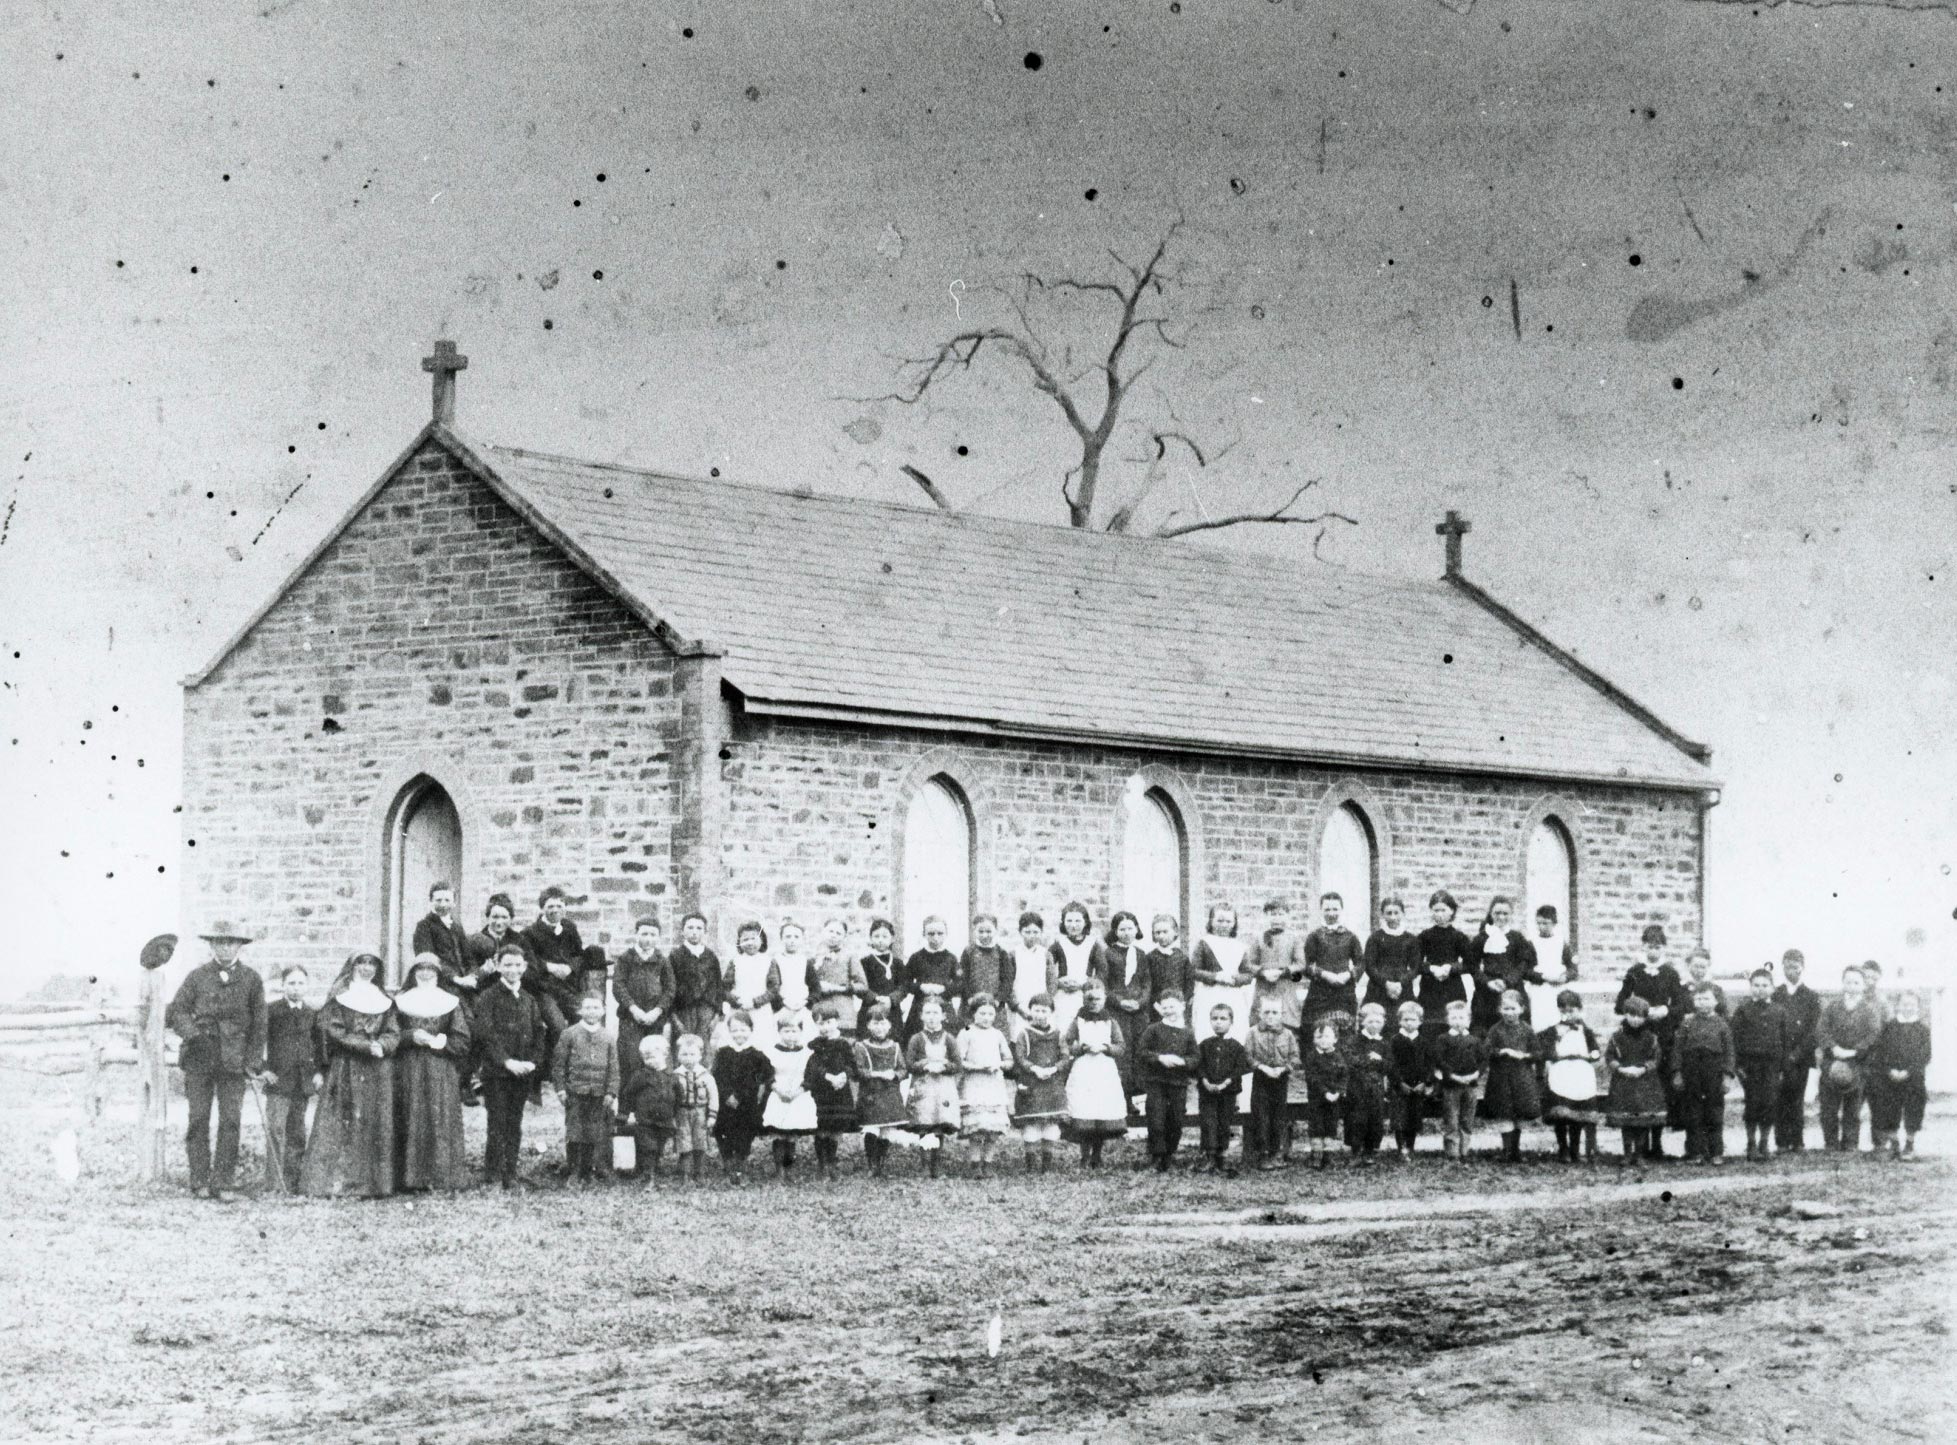 <p>St Joseph’s Catholic School, Strathalbyn, South Australia, 1884</p>
